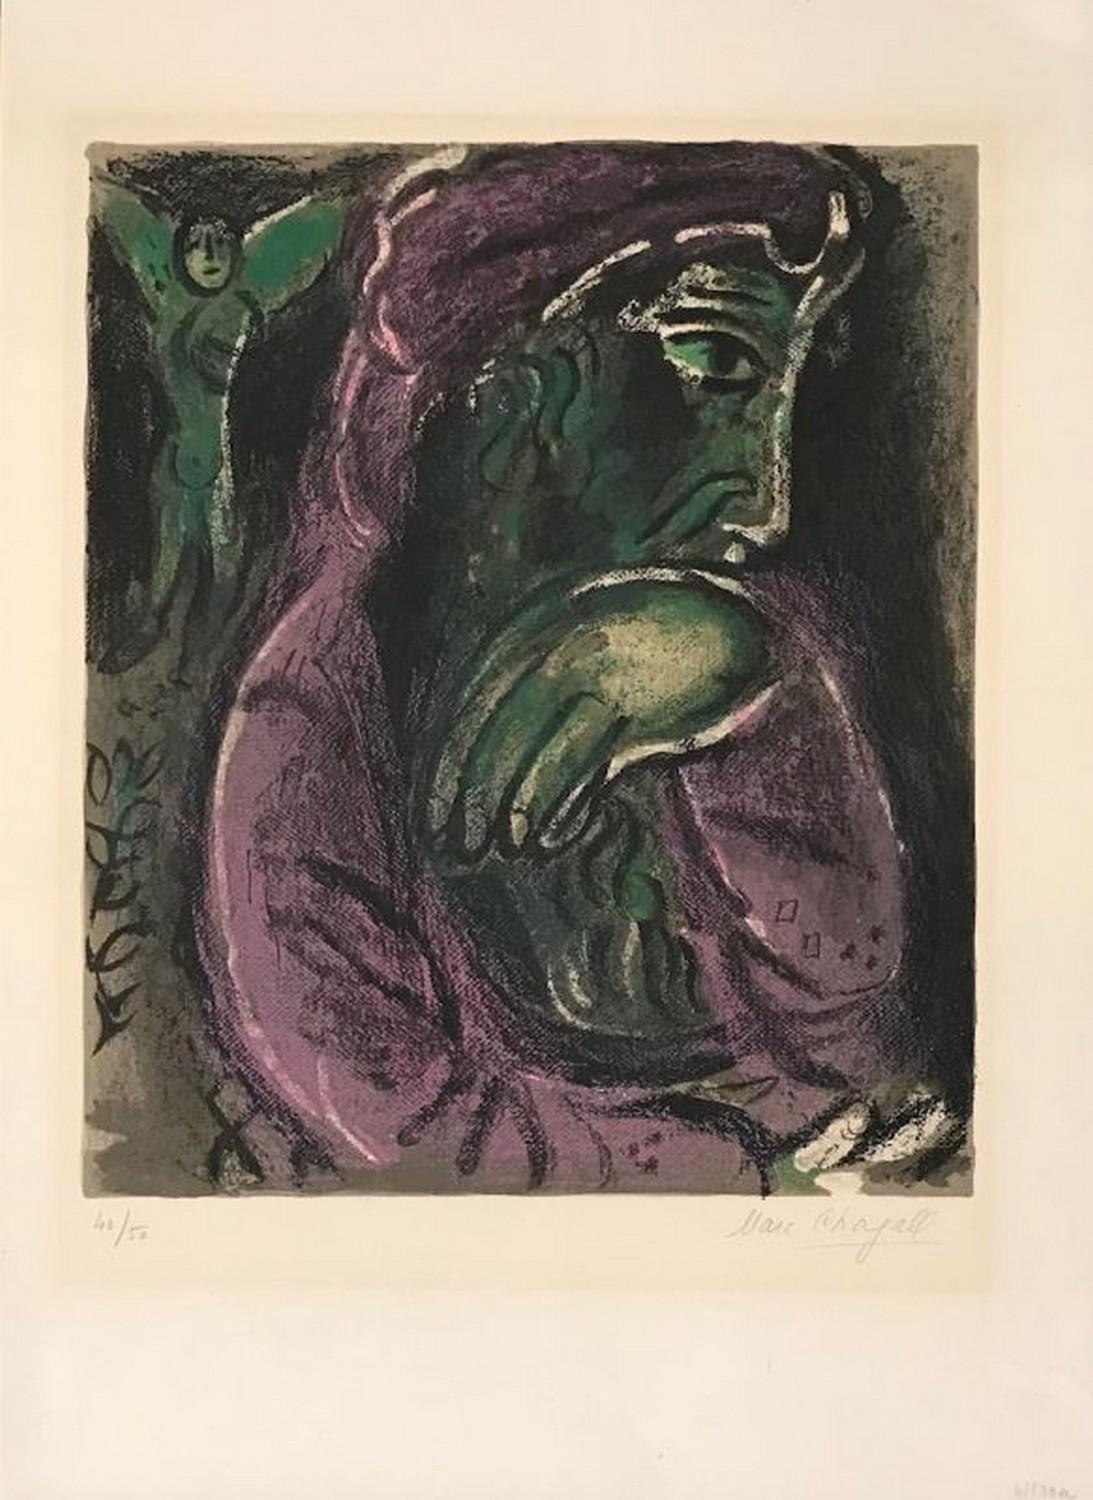 Job in despair  - Print by Marc Chagall